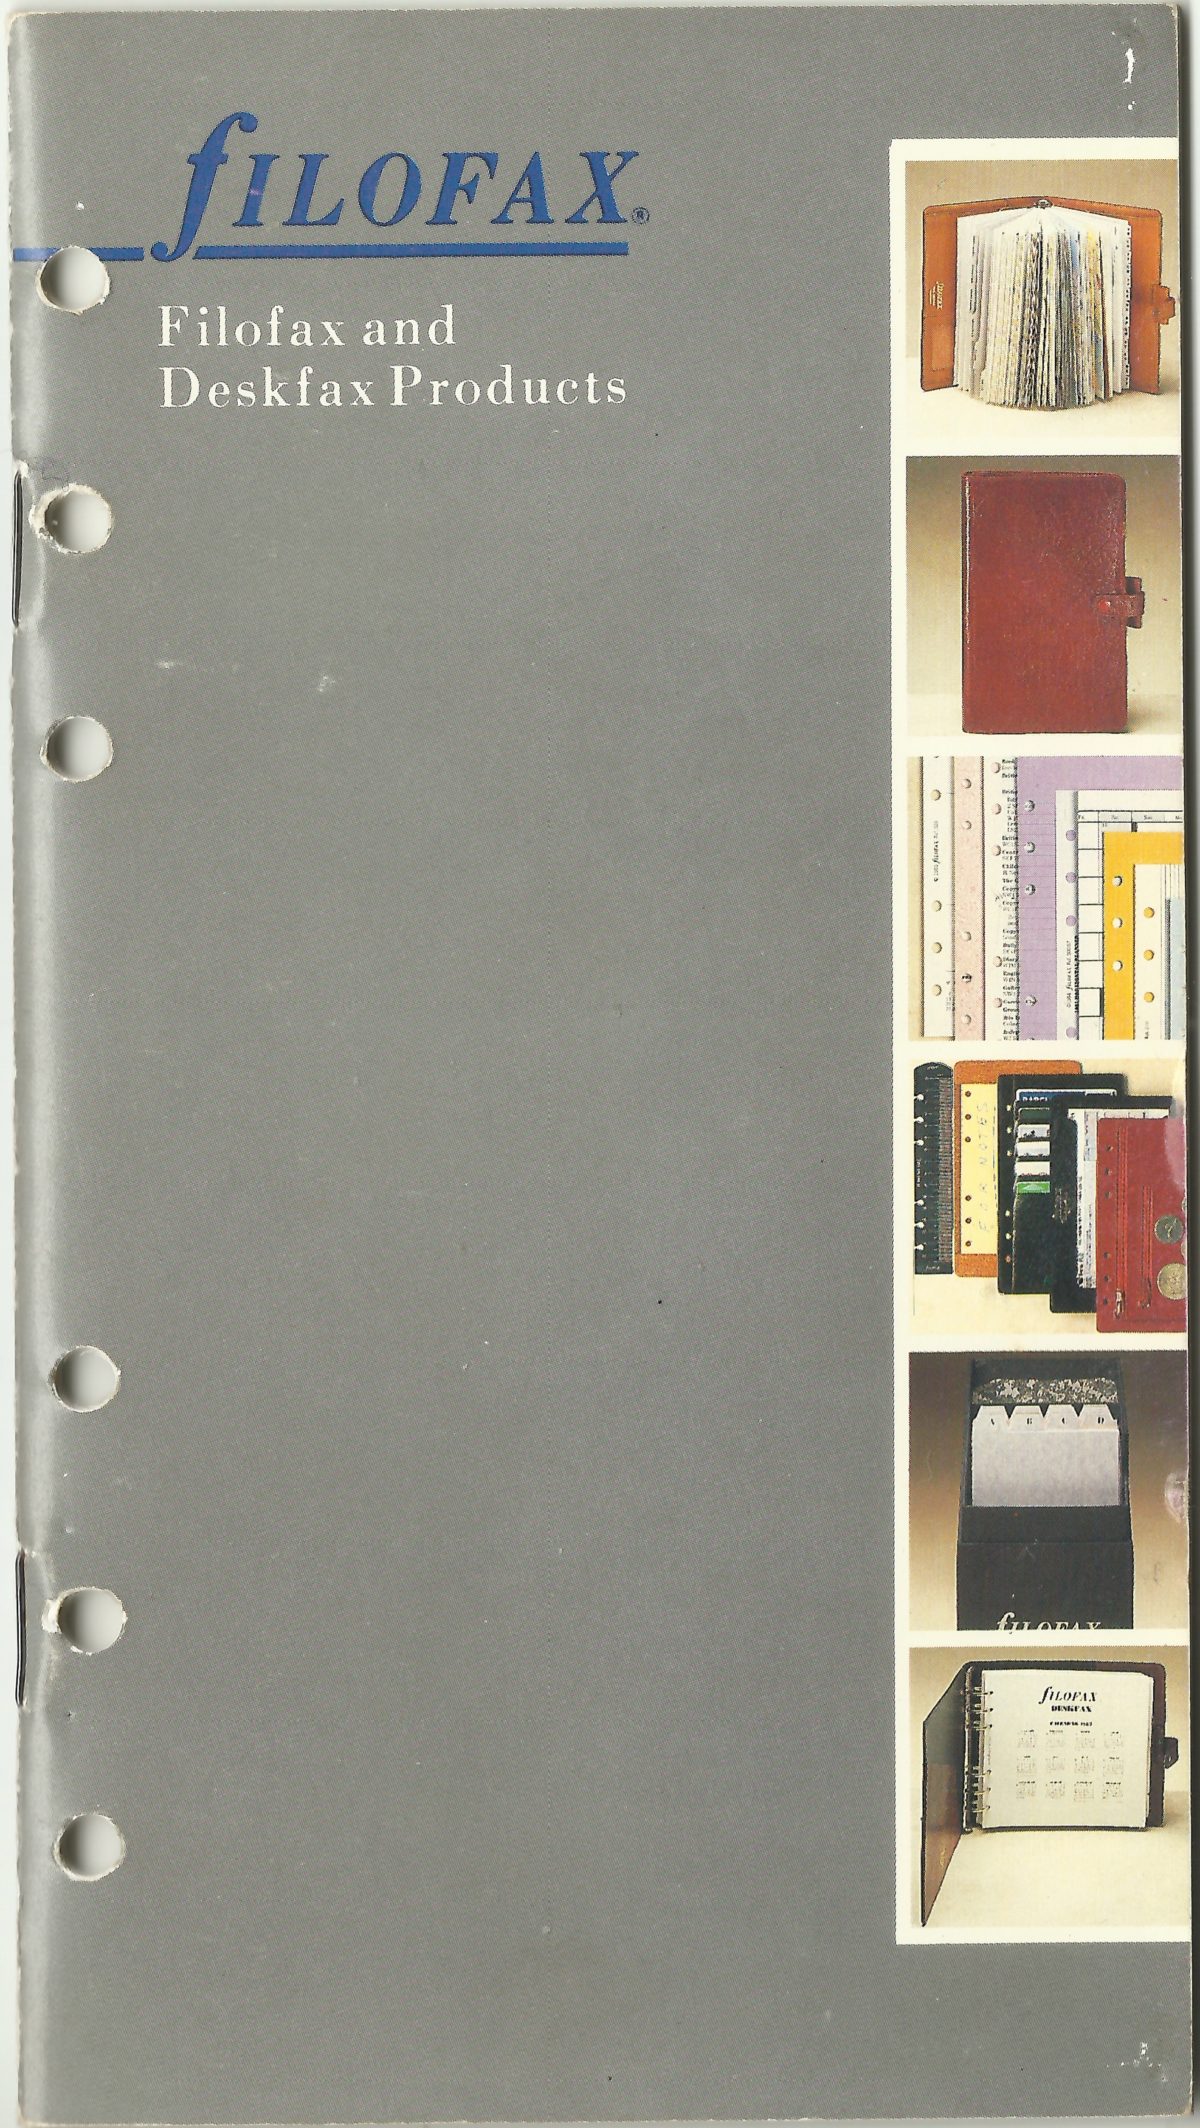 Filofax UK full catalogue 1987